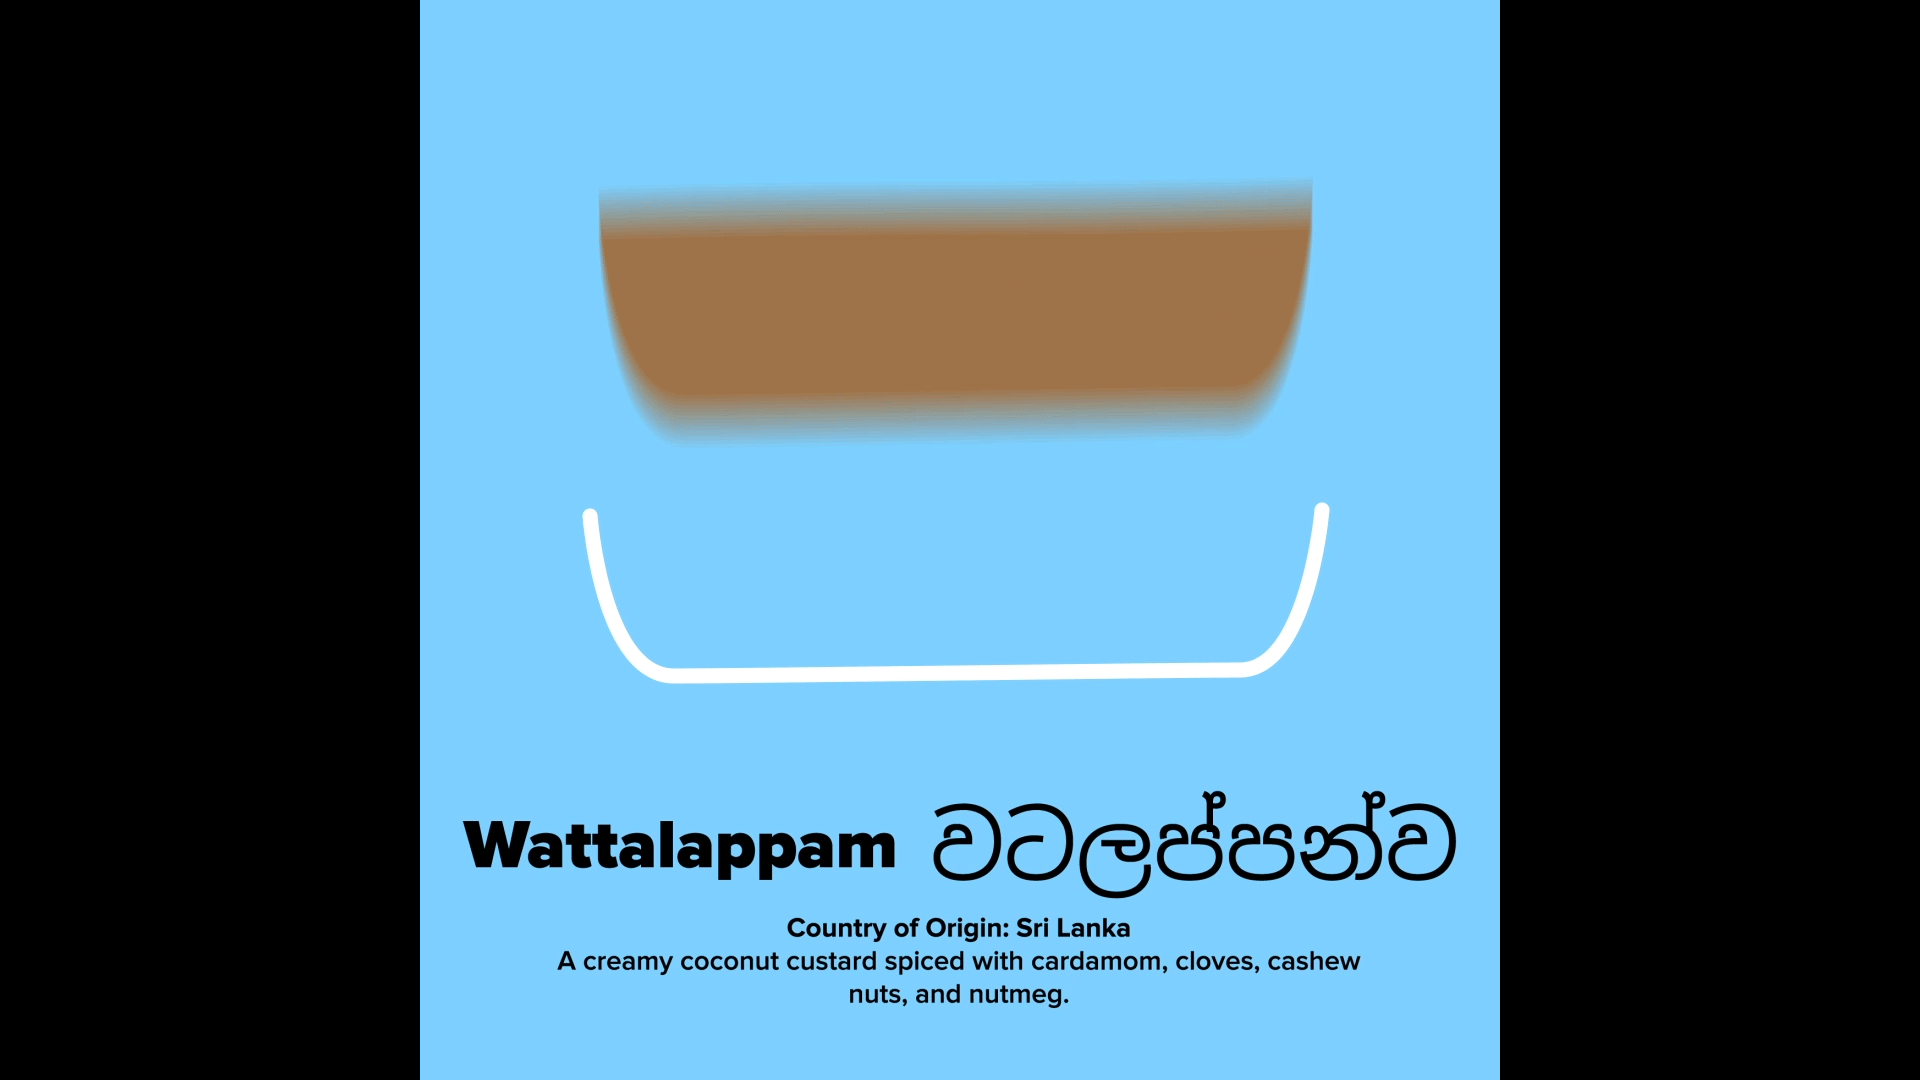 Wattalappam